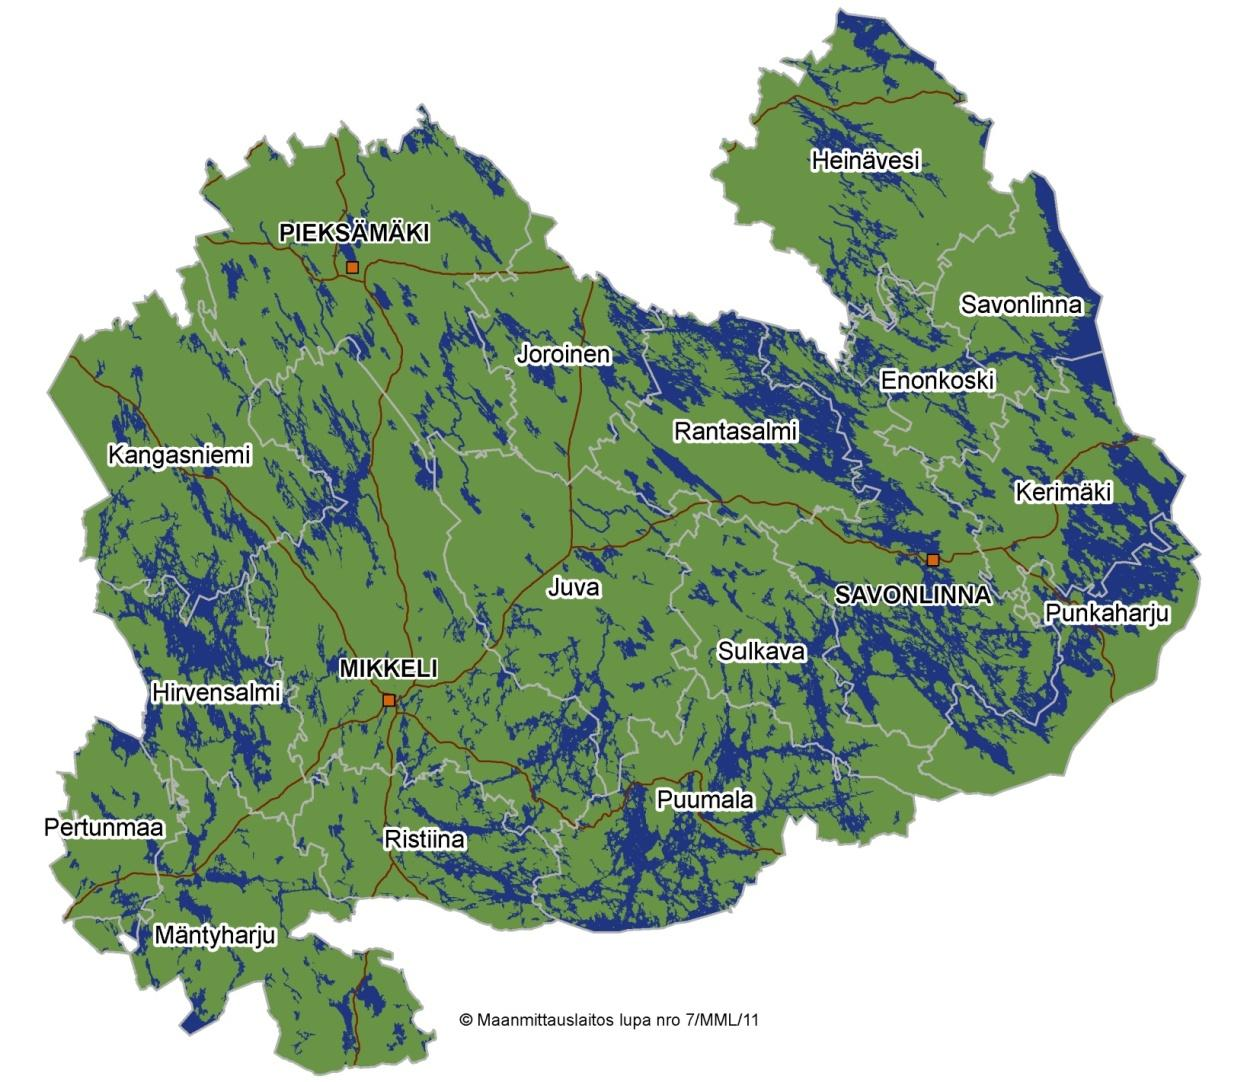 Province of Etelä-Savo Area 18 768 km 2 including forests 88% of the area internal waters 4 785 km 2 over 4 7 lakes 14 islands Lake Saimaa 3 8 km 2 shoreline 3 12 km Saimaa